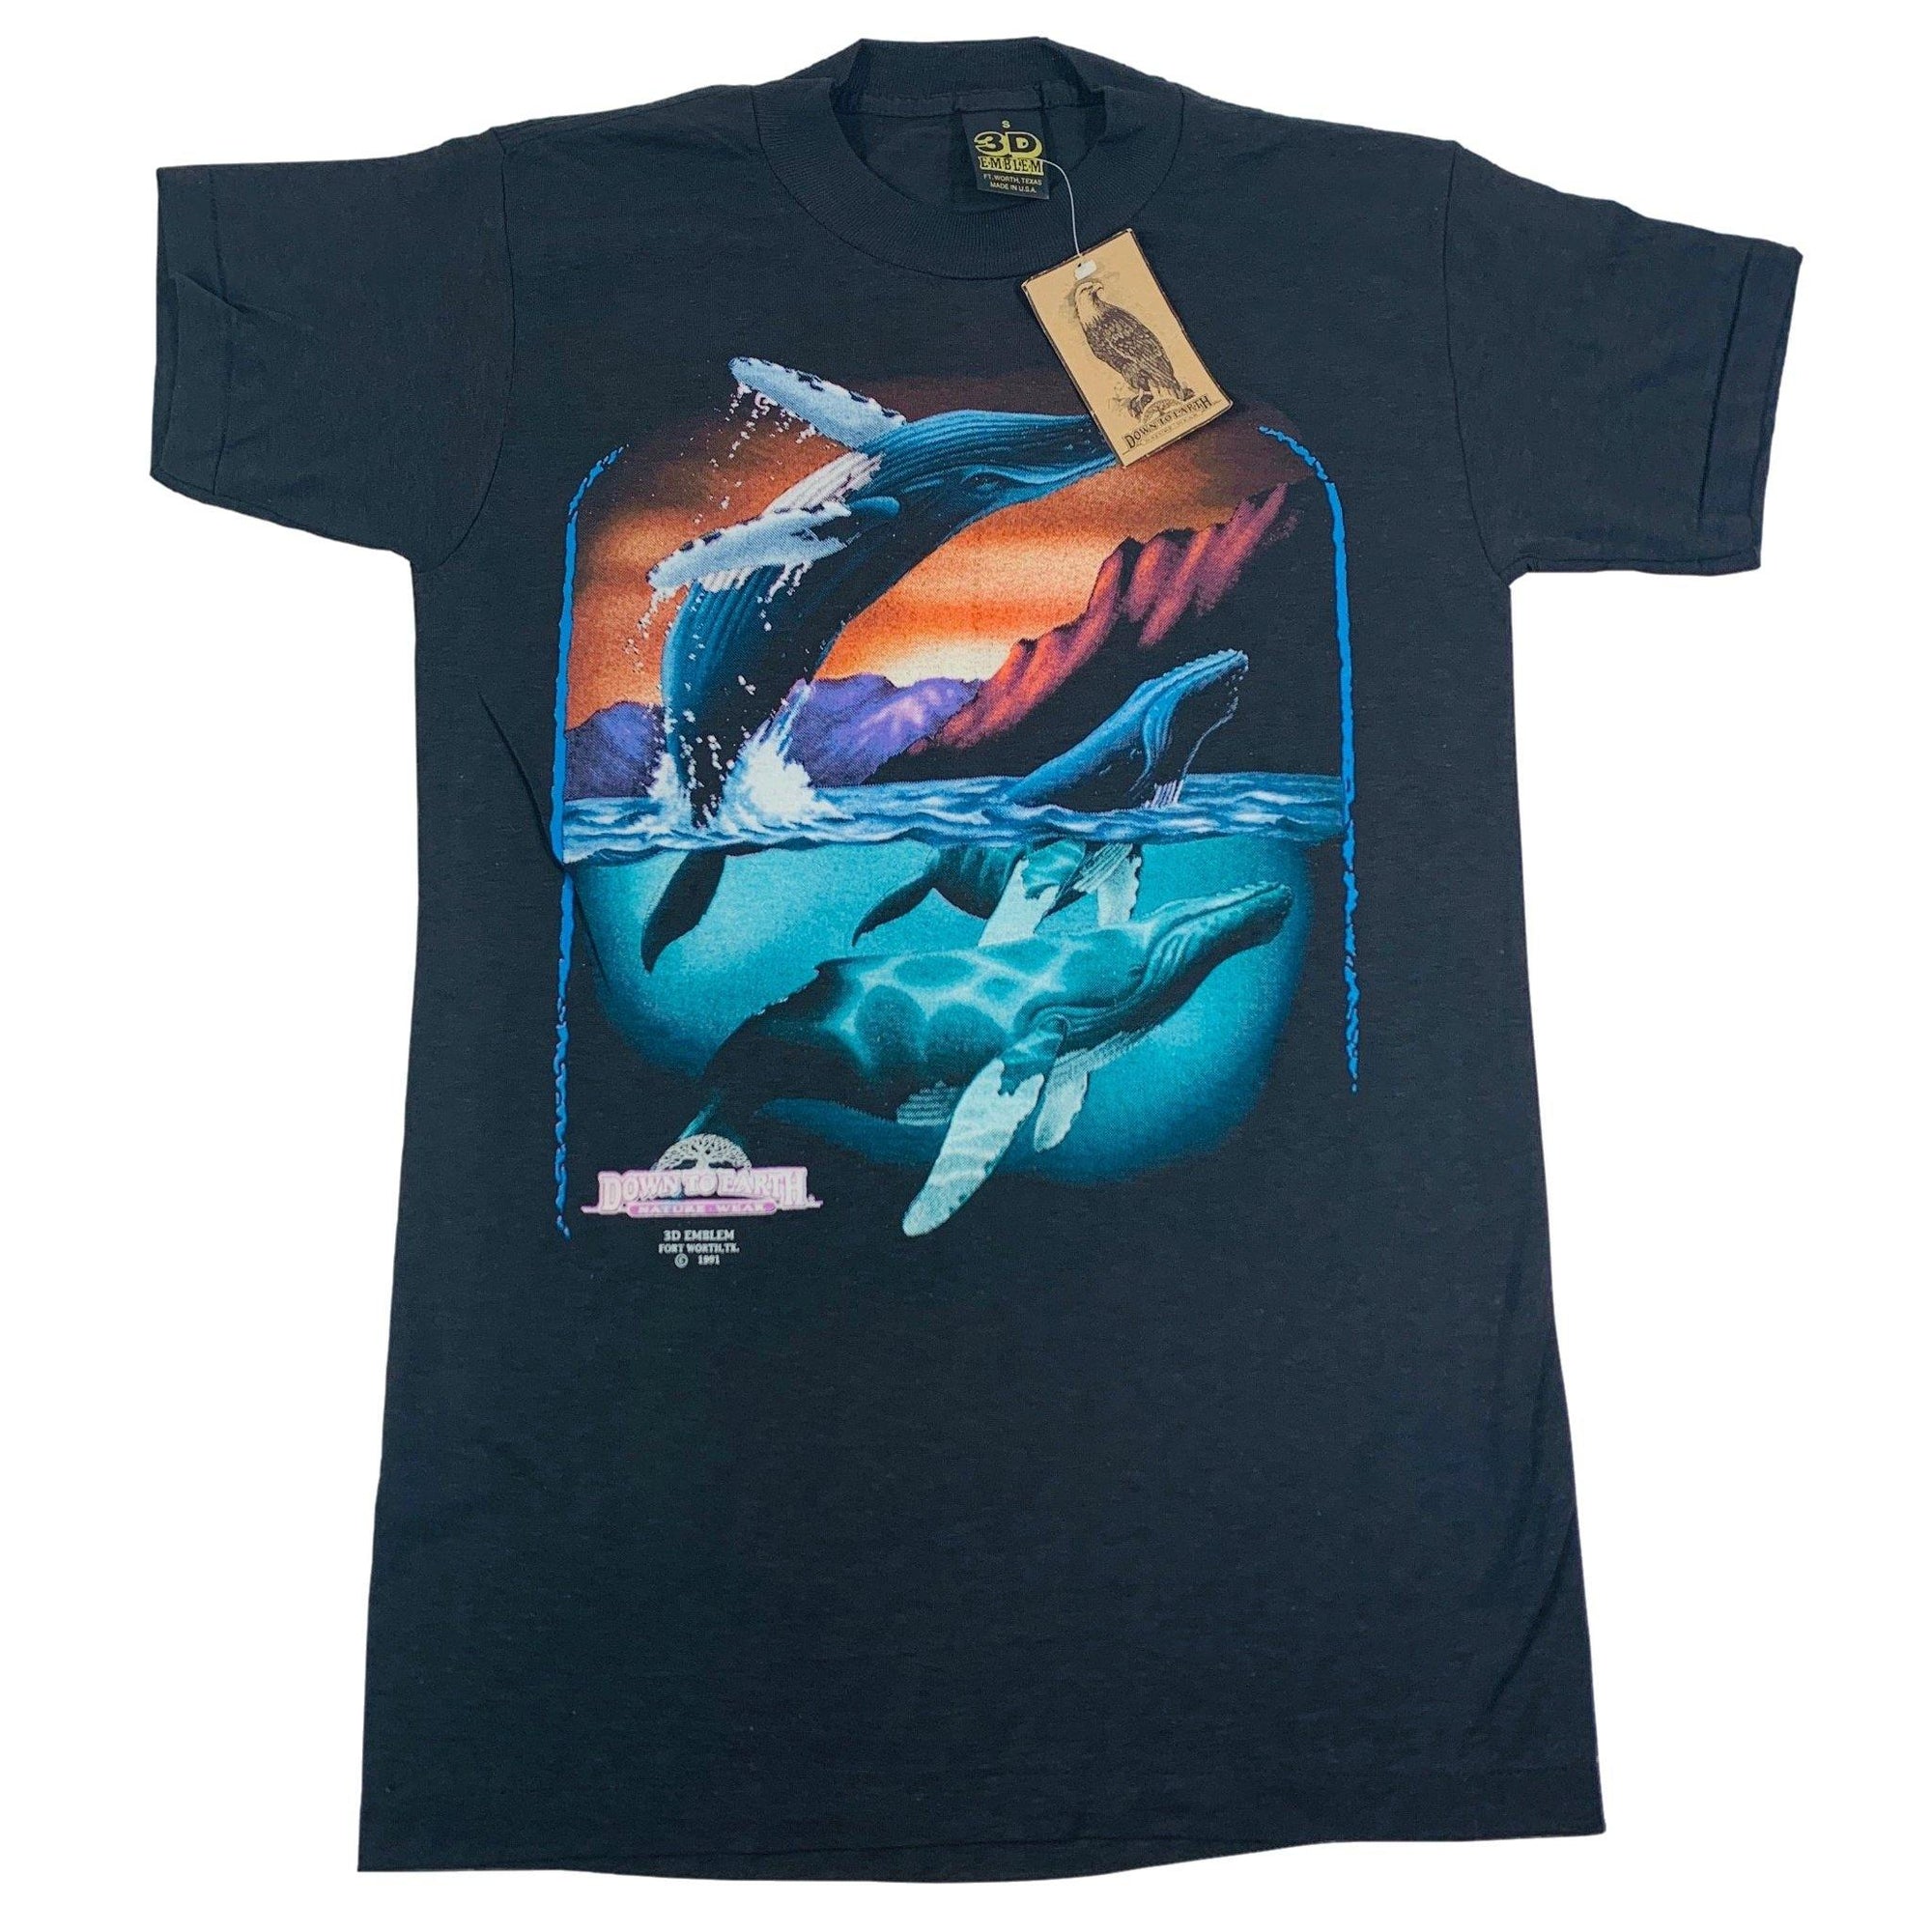 Vintage 3D Emblem "Down To Earth" Whale T-Shirt - jointcustodydc